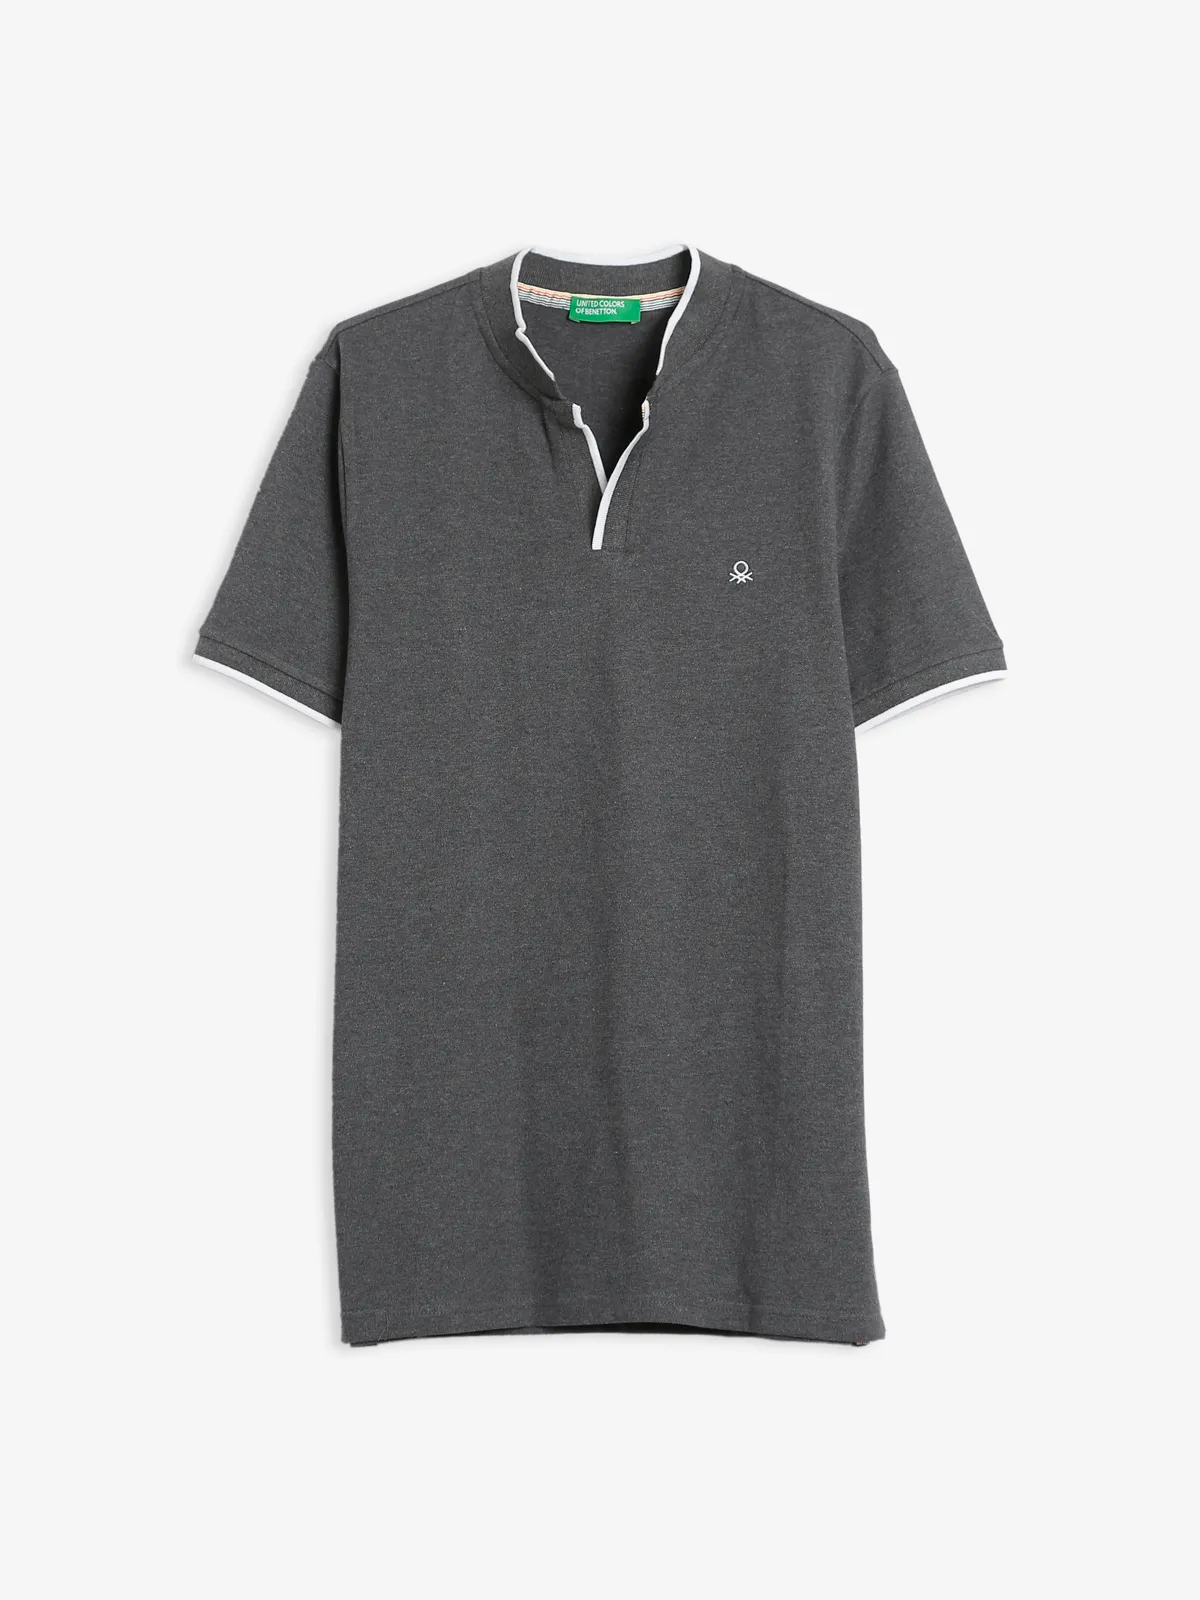 UCB cotton grey polo t shirt